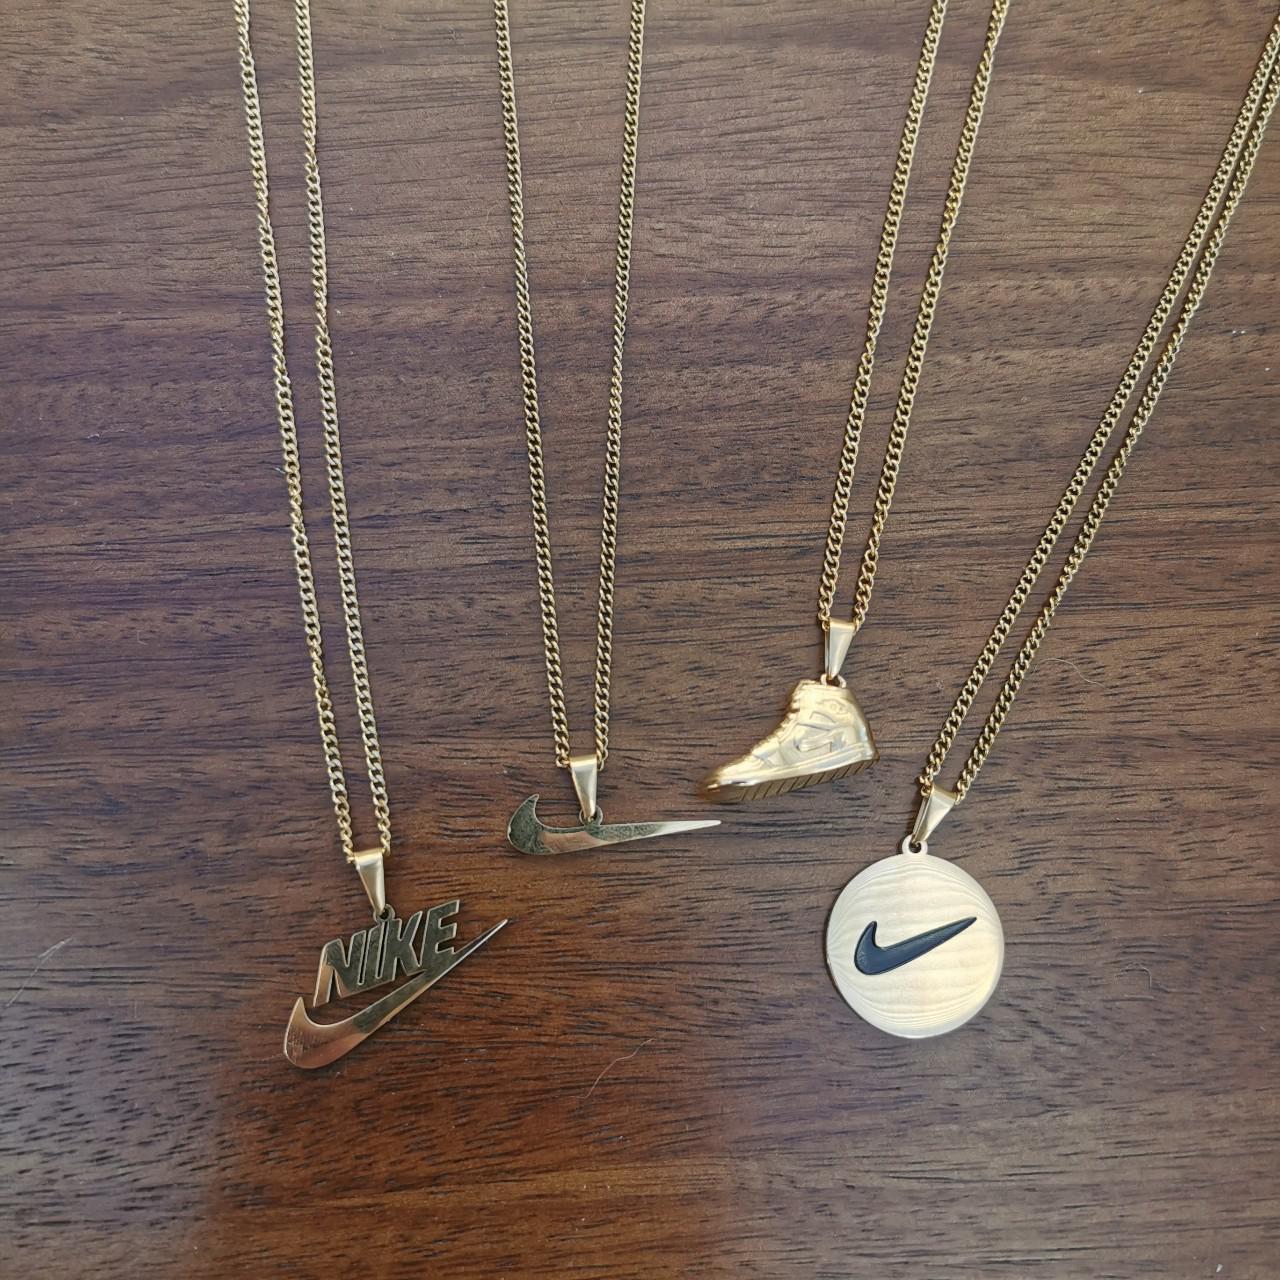 New Nike Gold Pendant chains 🔗 Lenghs📏 45cm... - Depop